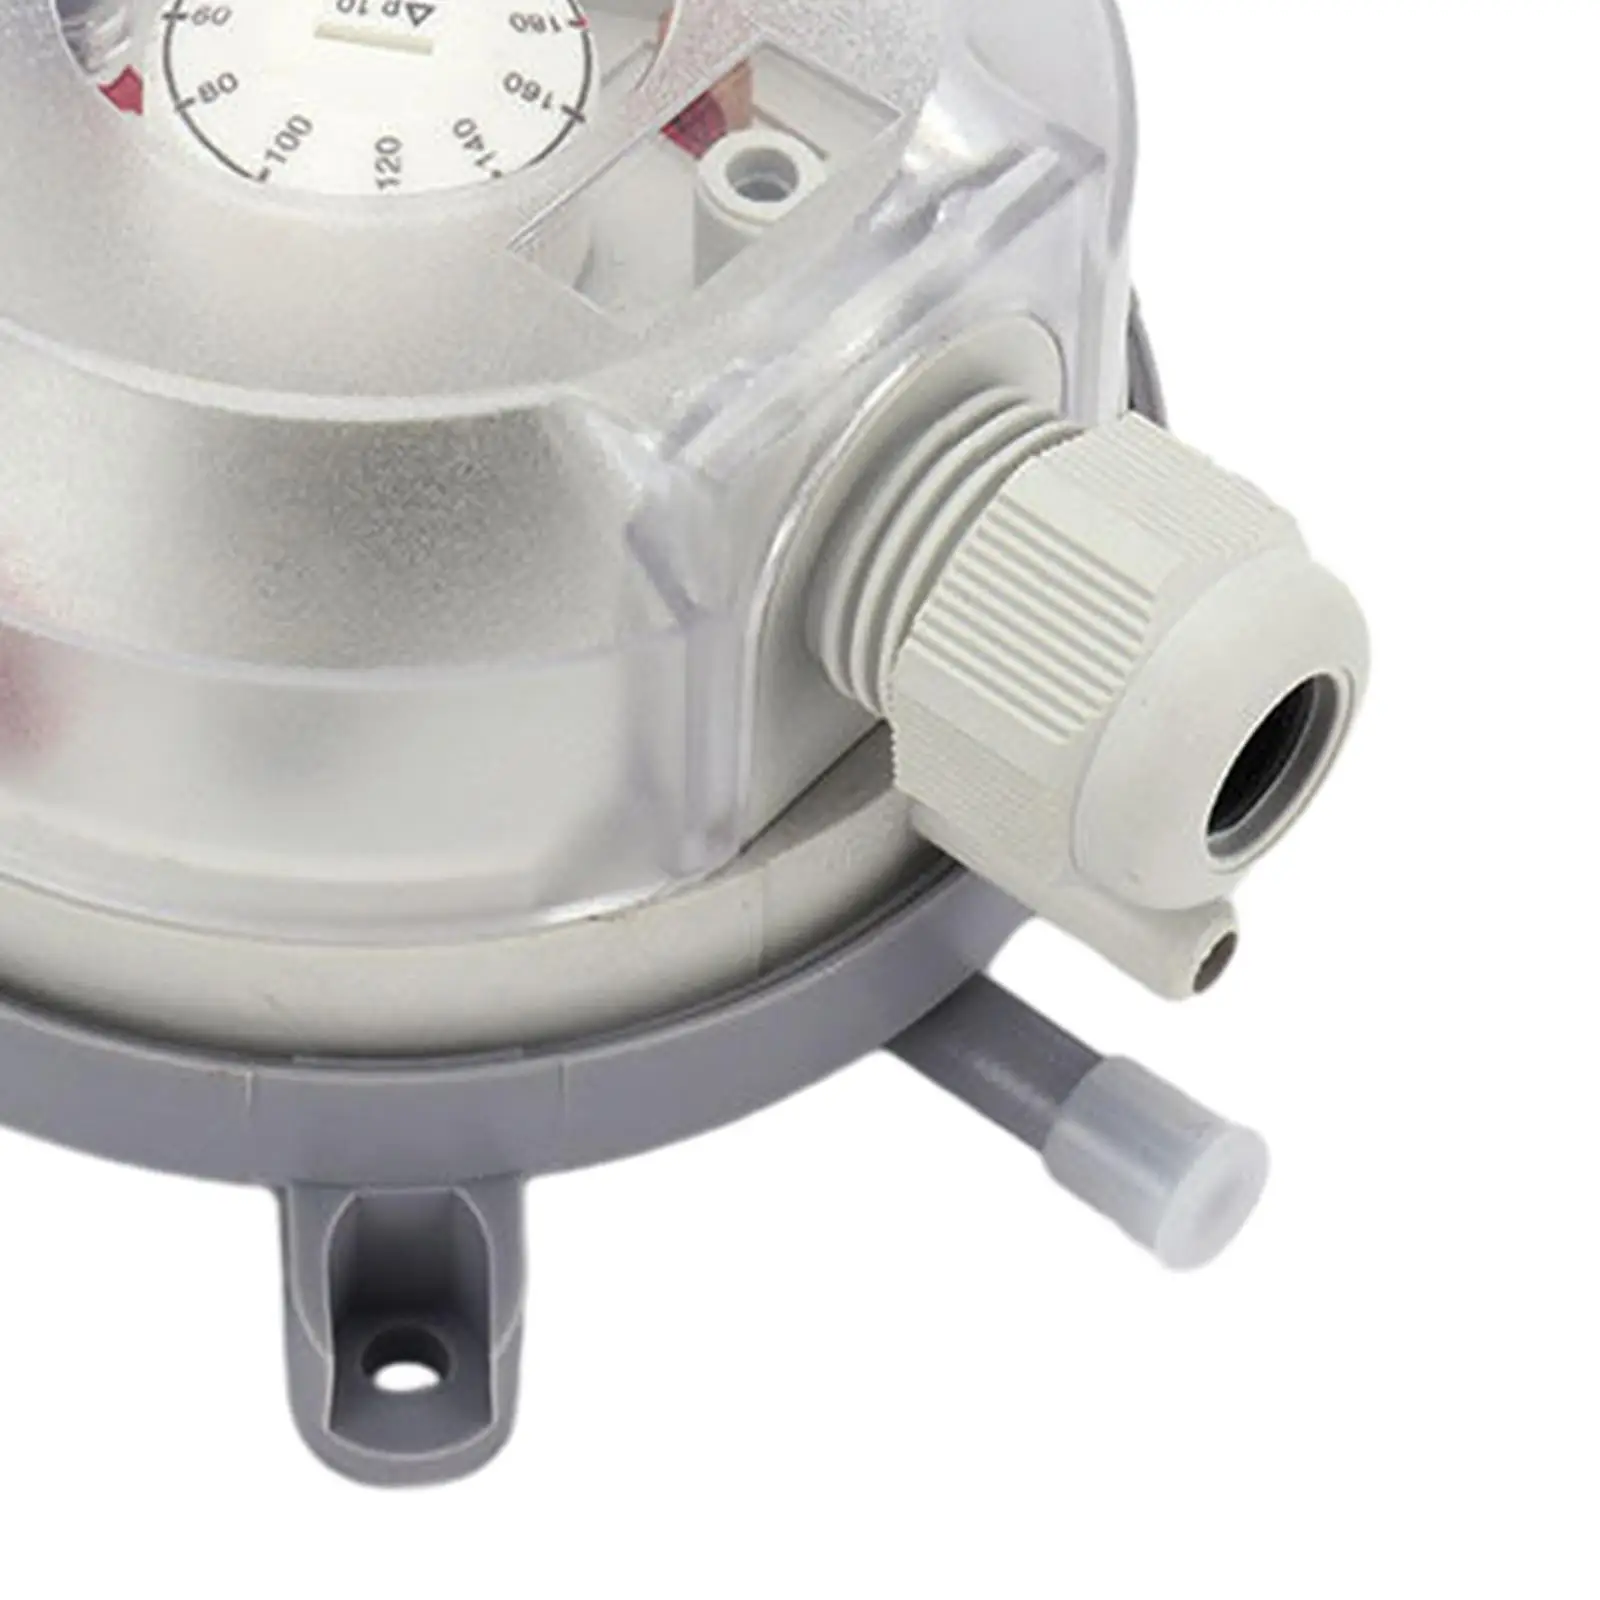 Differential Pressure Switch Micro Multipurpose Air Pressure Sensor for Aerospace Engineering Electronic Processing Equipment